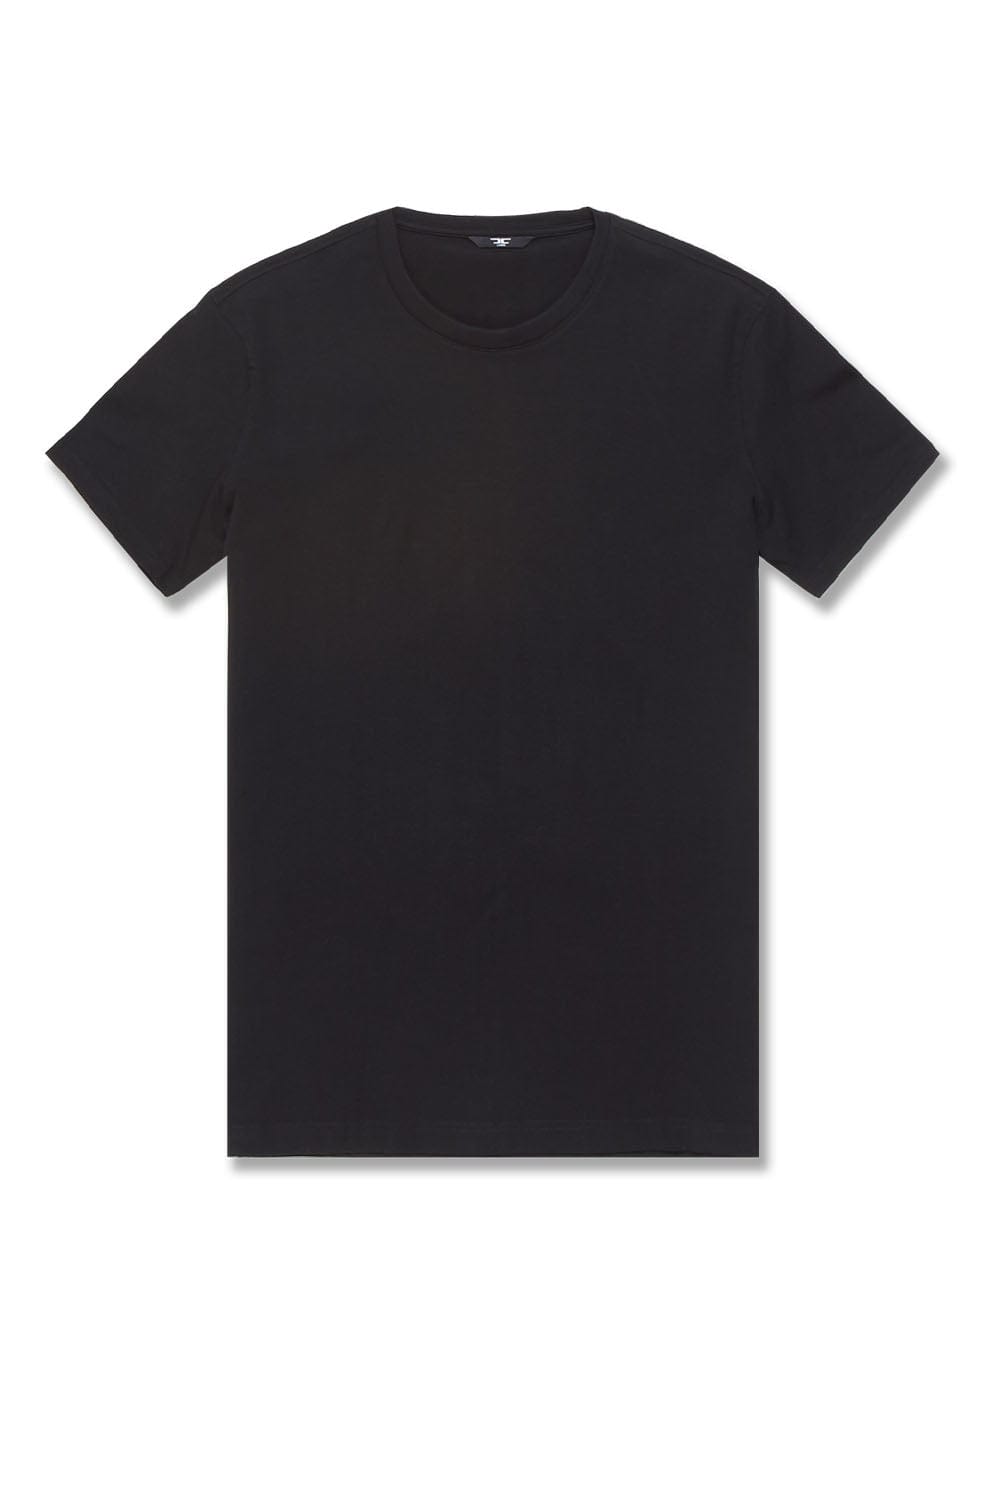 Jordan Craig Premium Crewneck T-Shirt Black / S